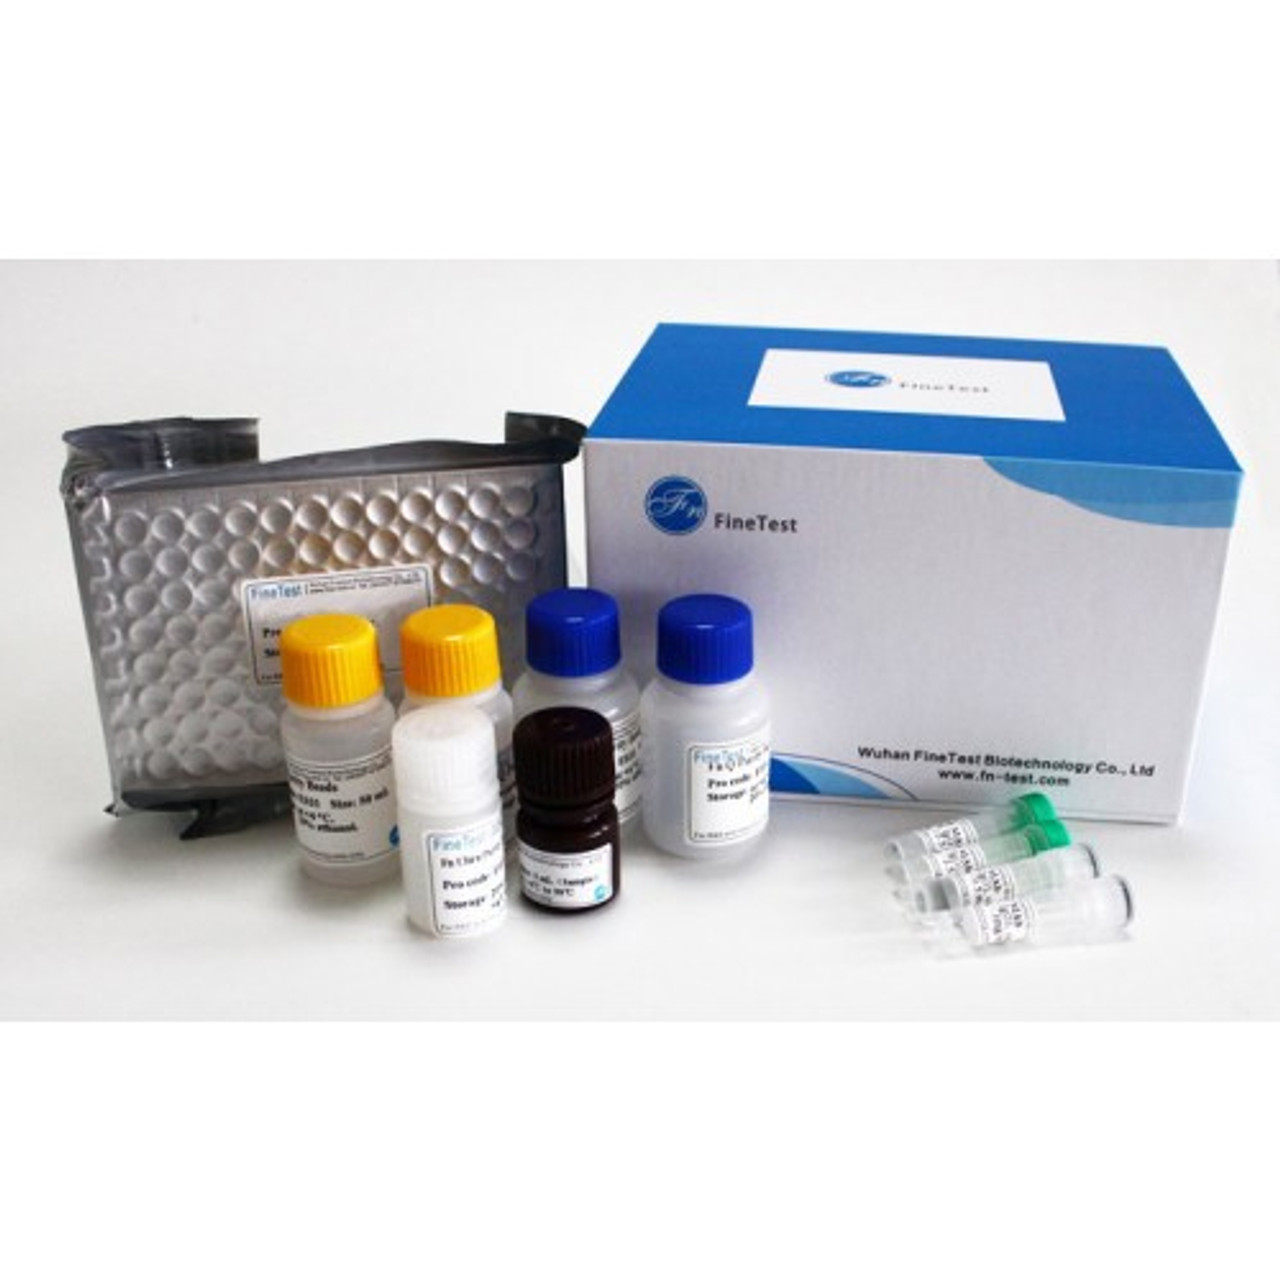 Sheep ACE(Angiotensin I Converting Enzyme) ELISA Kit